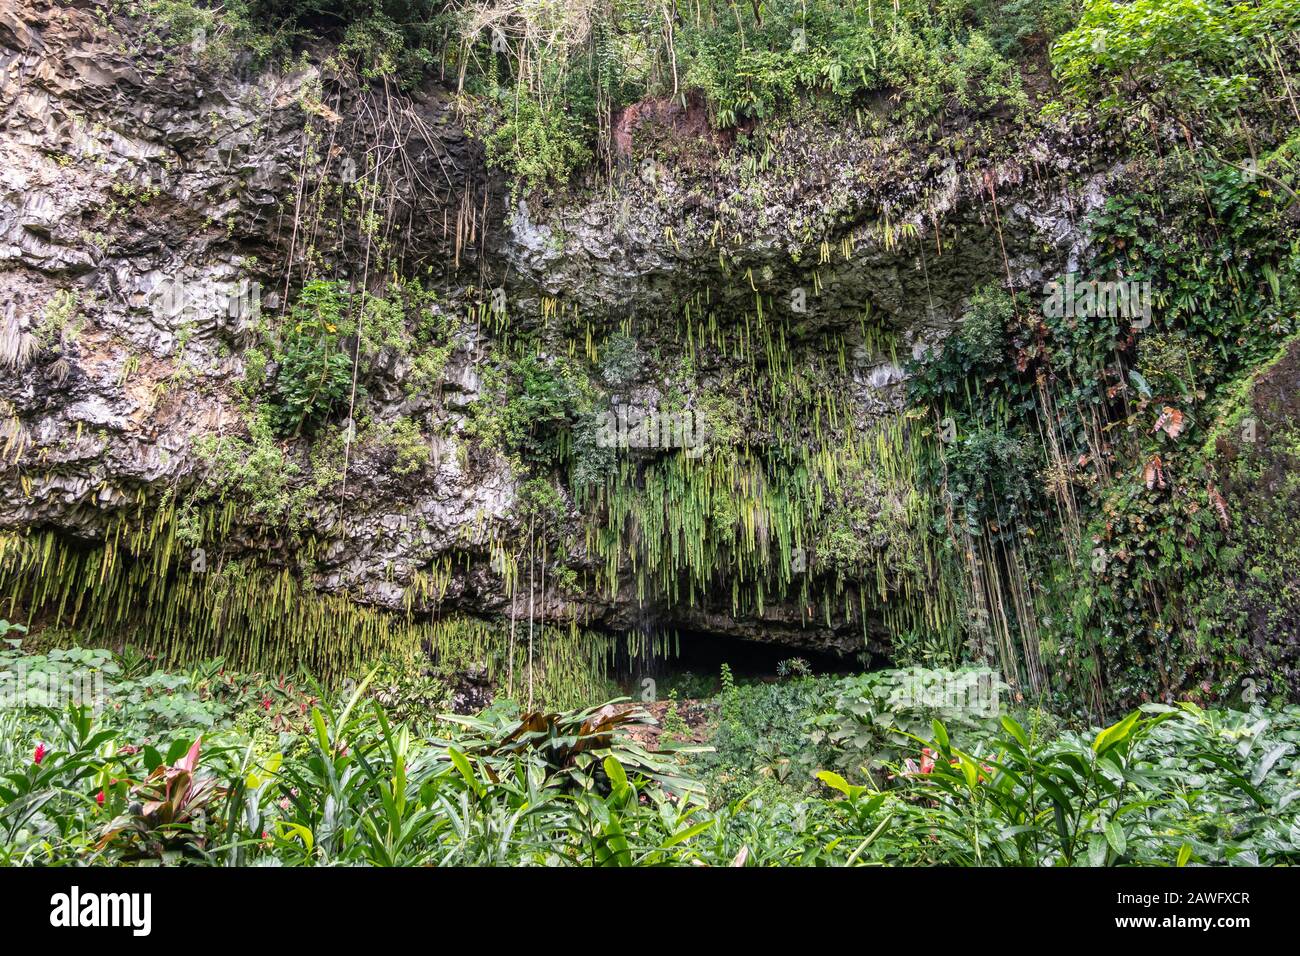 Kamokila Village, Kauai, Hawaii, USA. - January 16, 2020: Fern grotto hidden by green sword fern, trees, and plants at bottom of gray rock cliff. Stock Photo